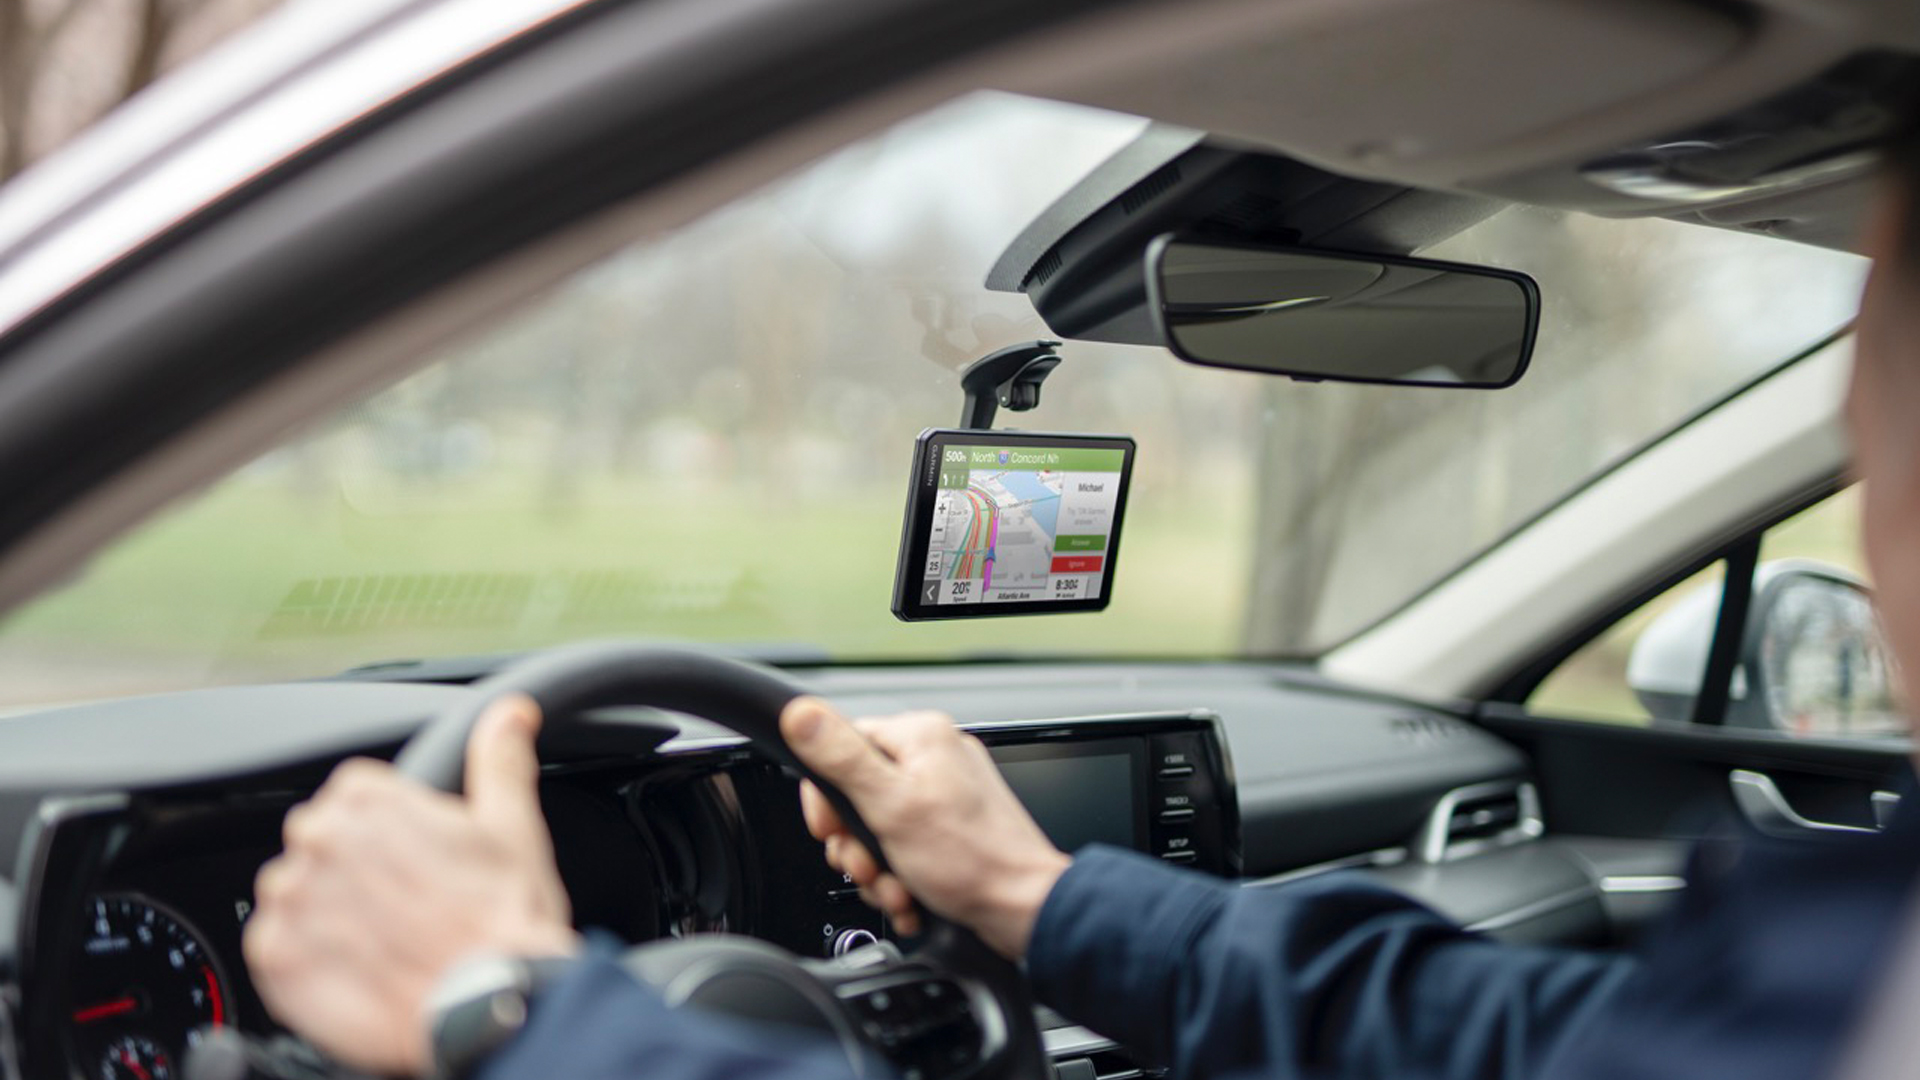 Garmin Automotive GPS, Garmin Car GPS